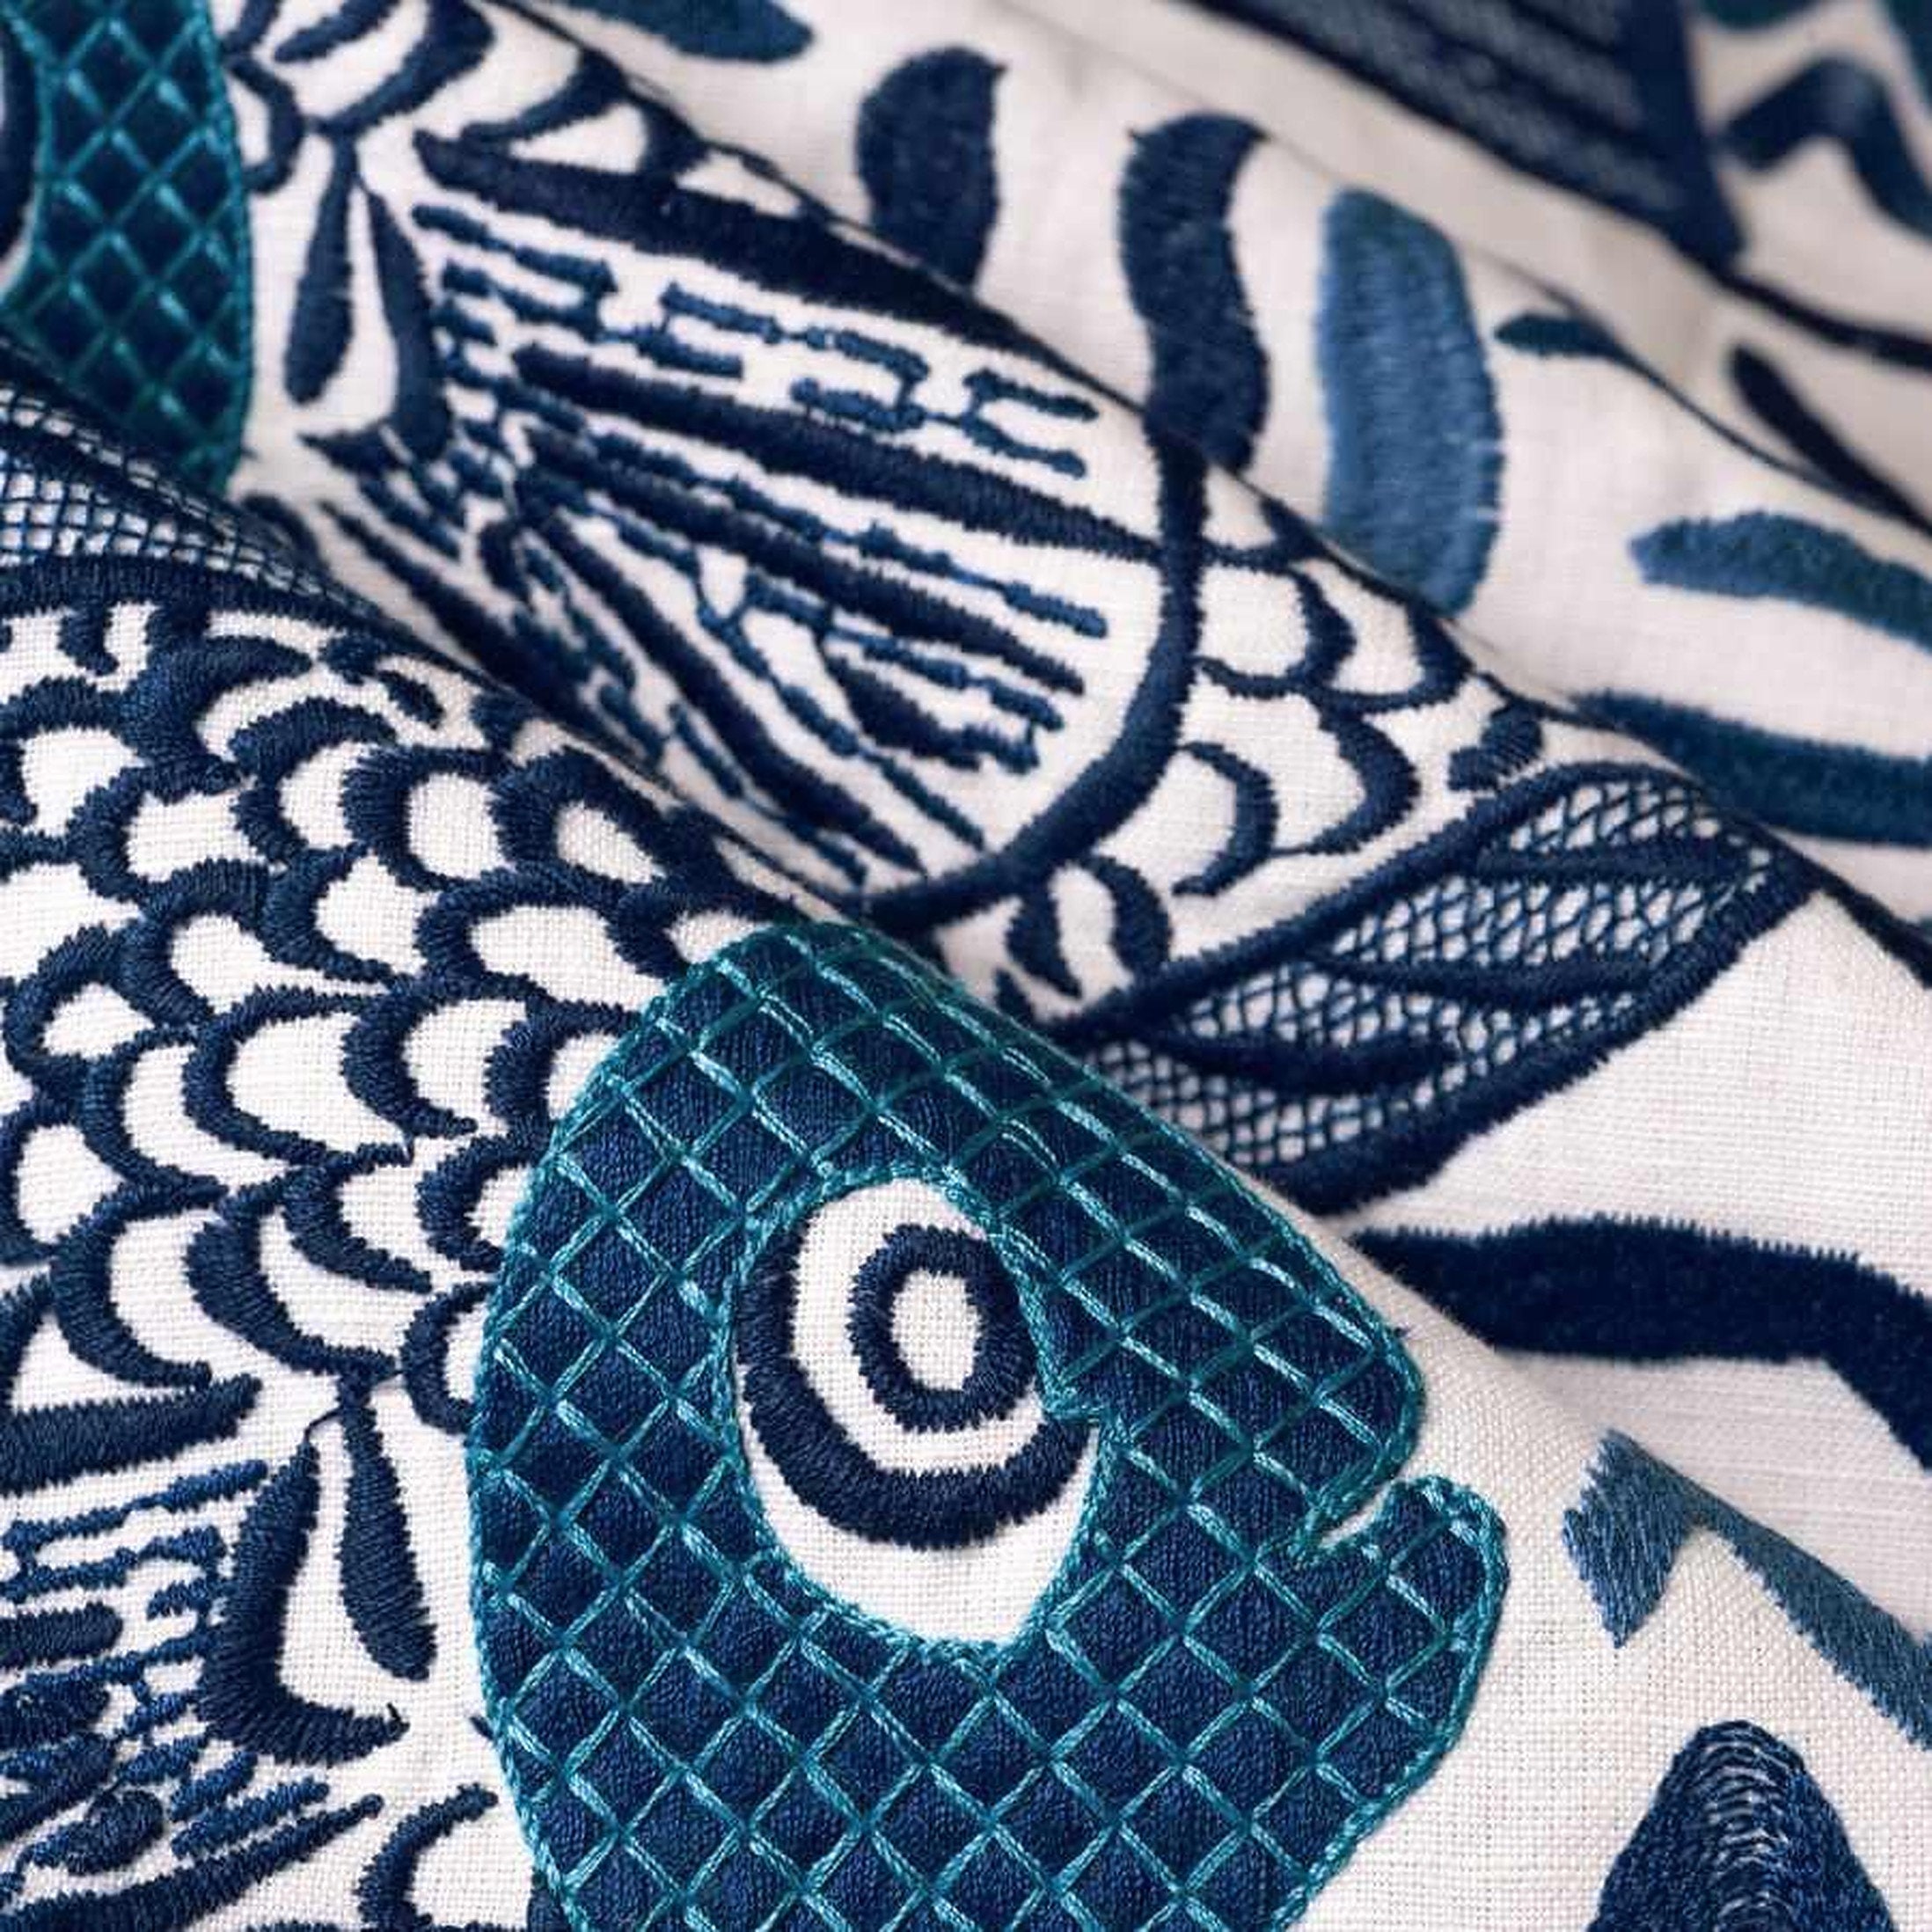 Blue Fish Fabric 